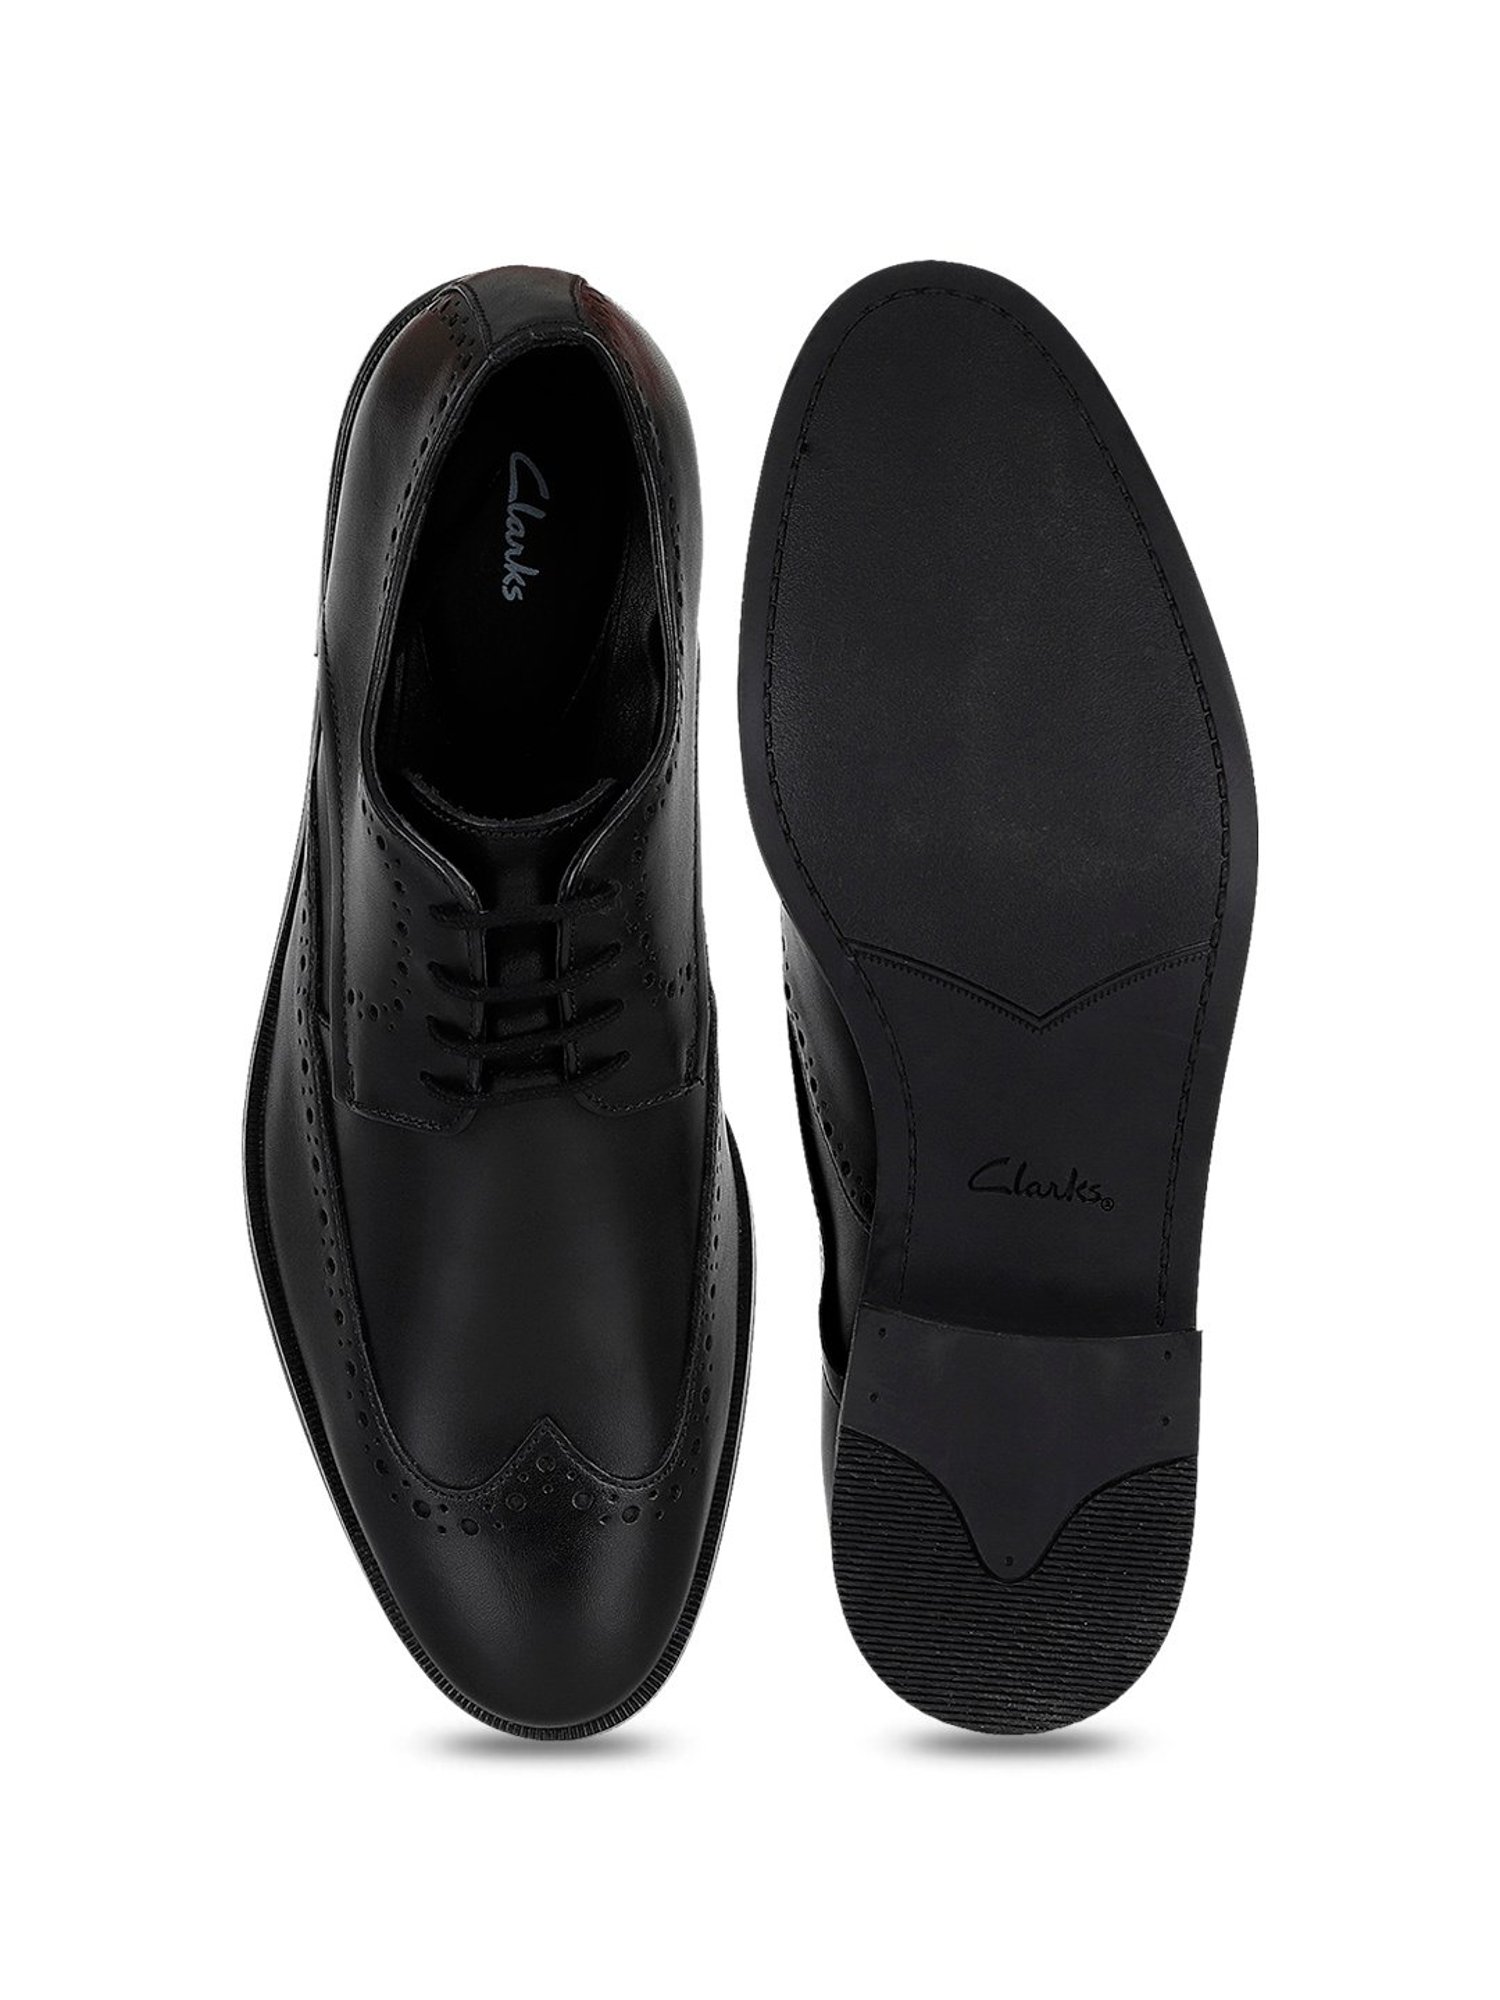 Buy Clarks Men's Black Shoes for Men at Best Price @ Tata CLiQ